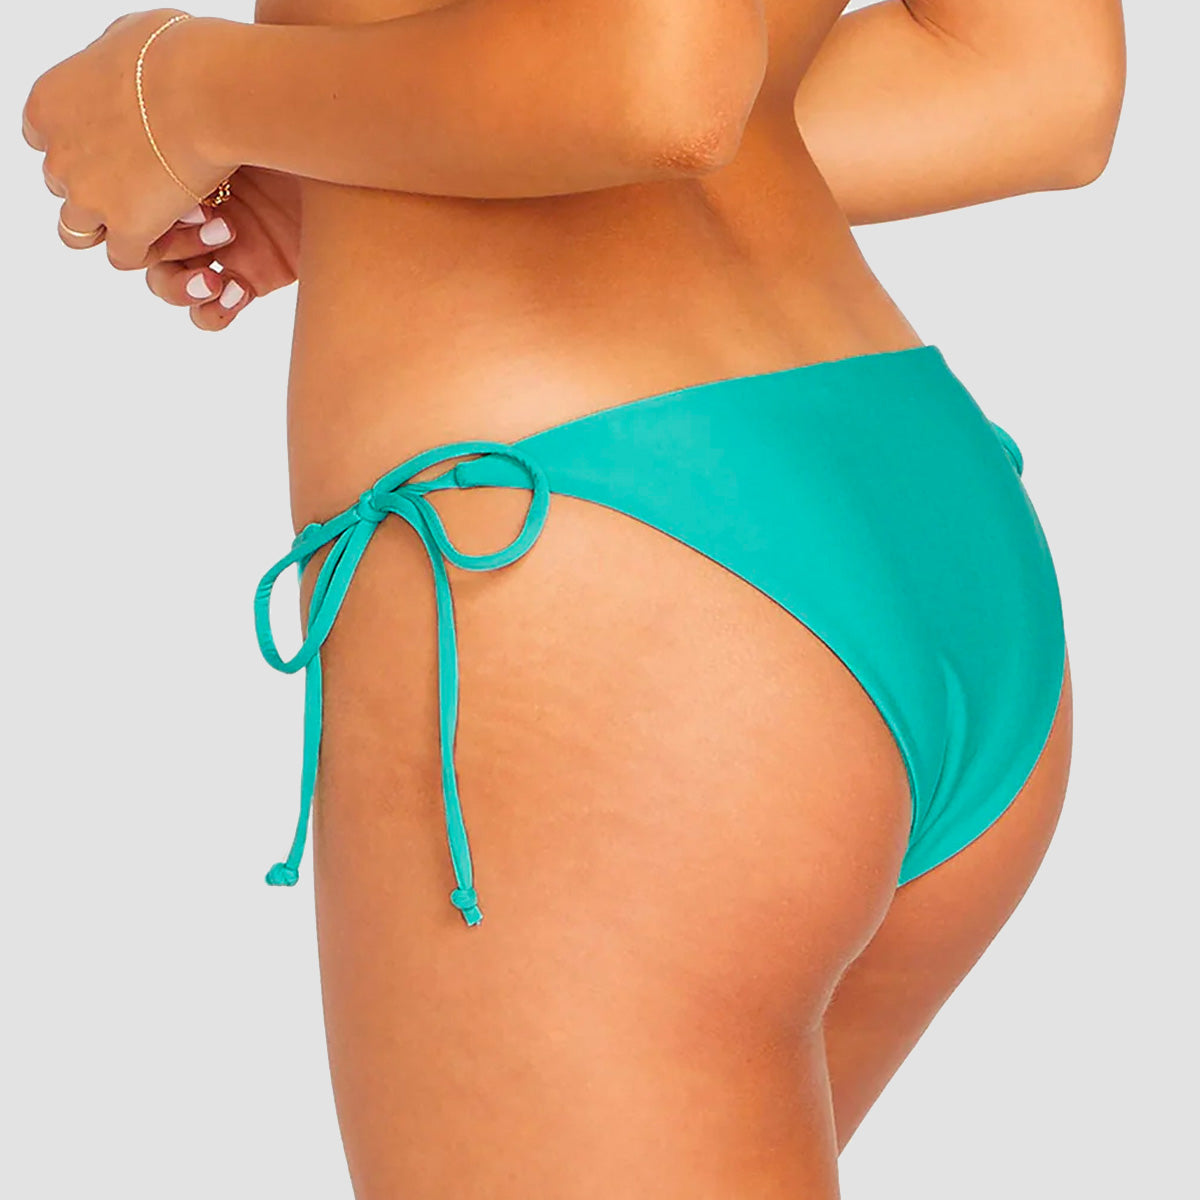 Seamless Turquoise Bikini Underwear for Women